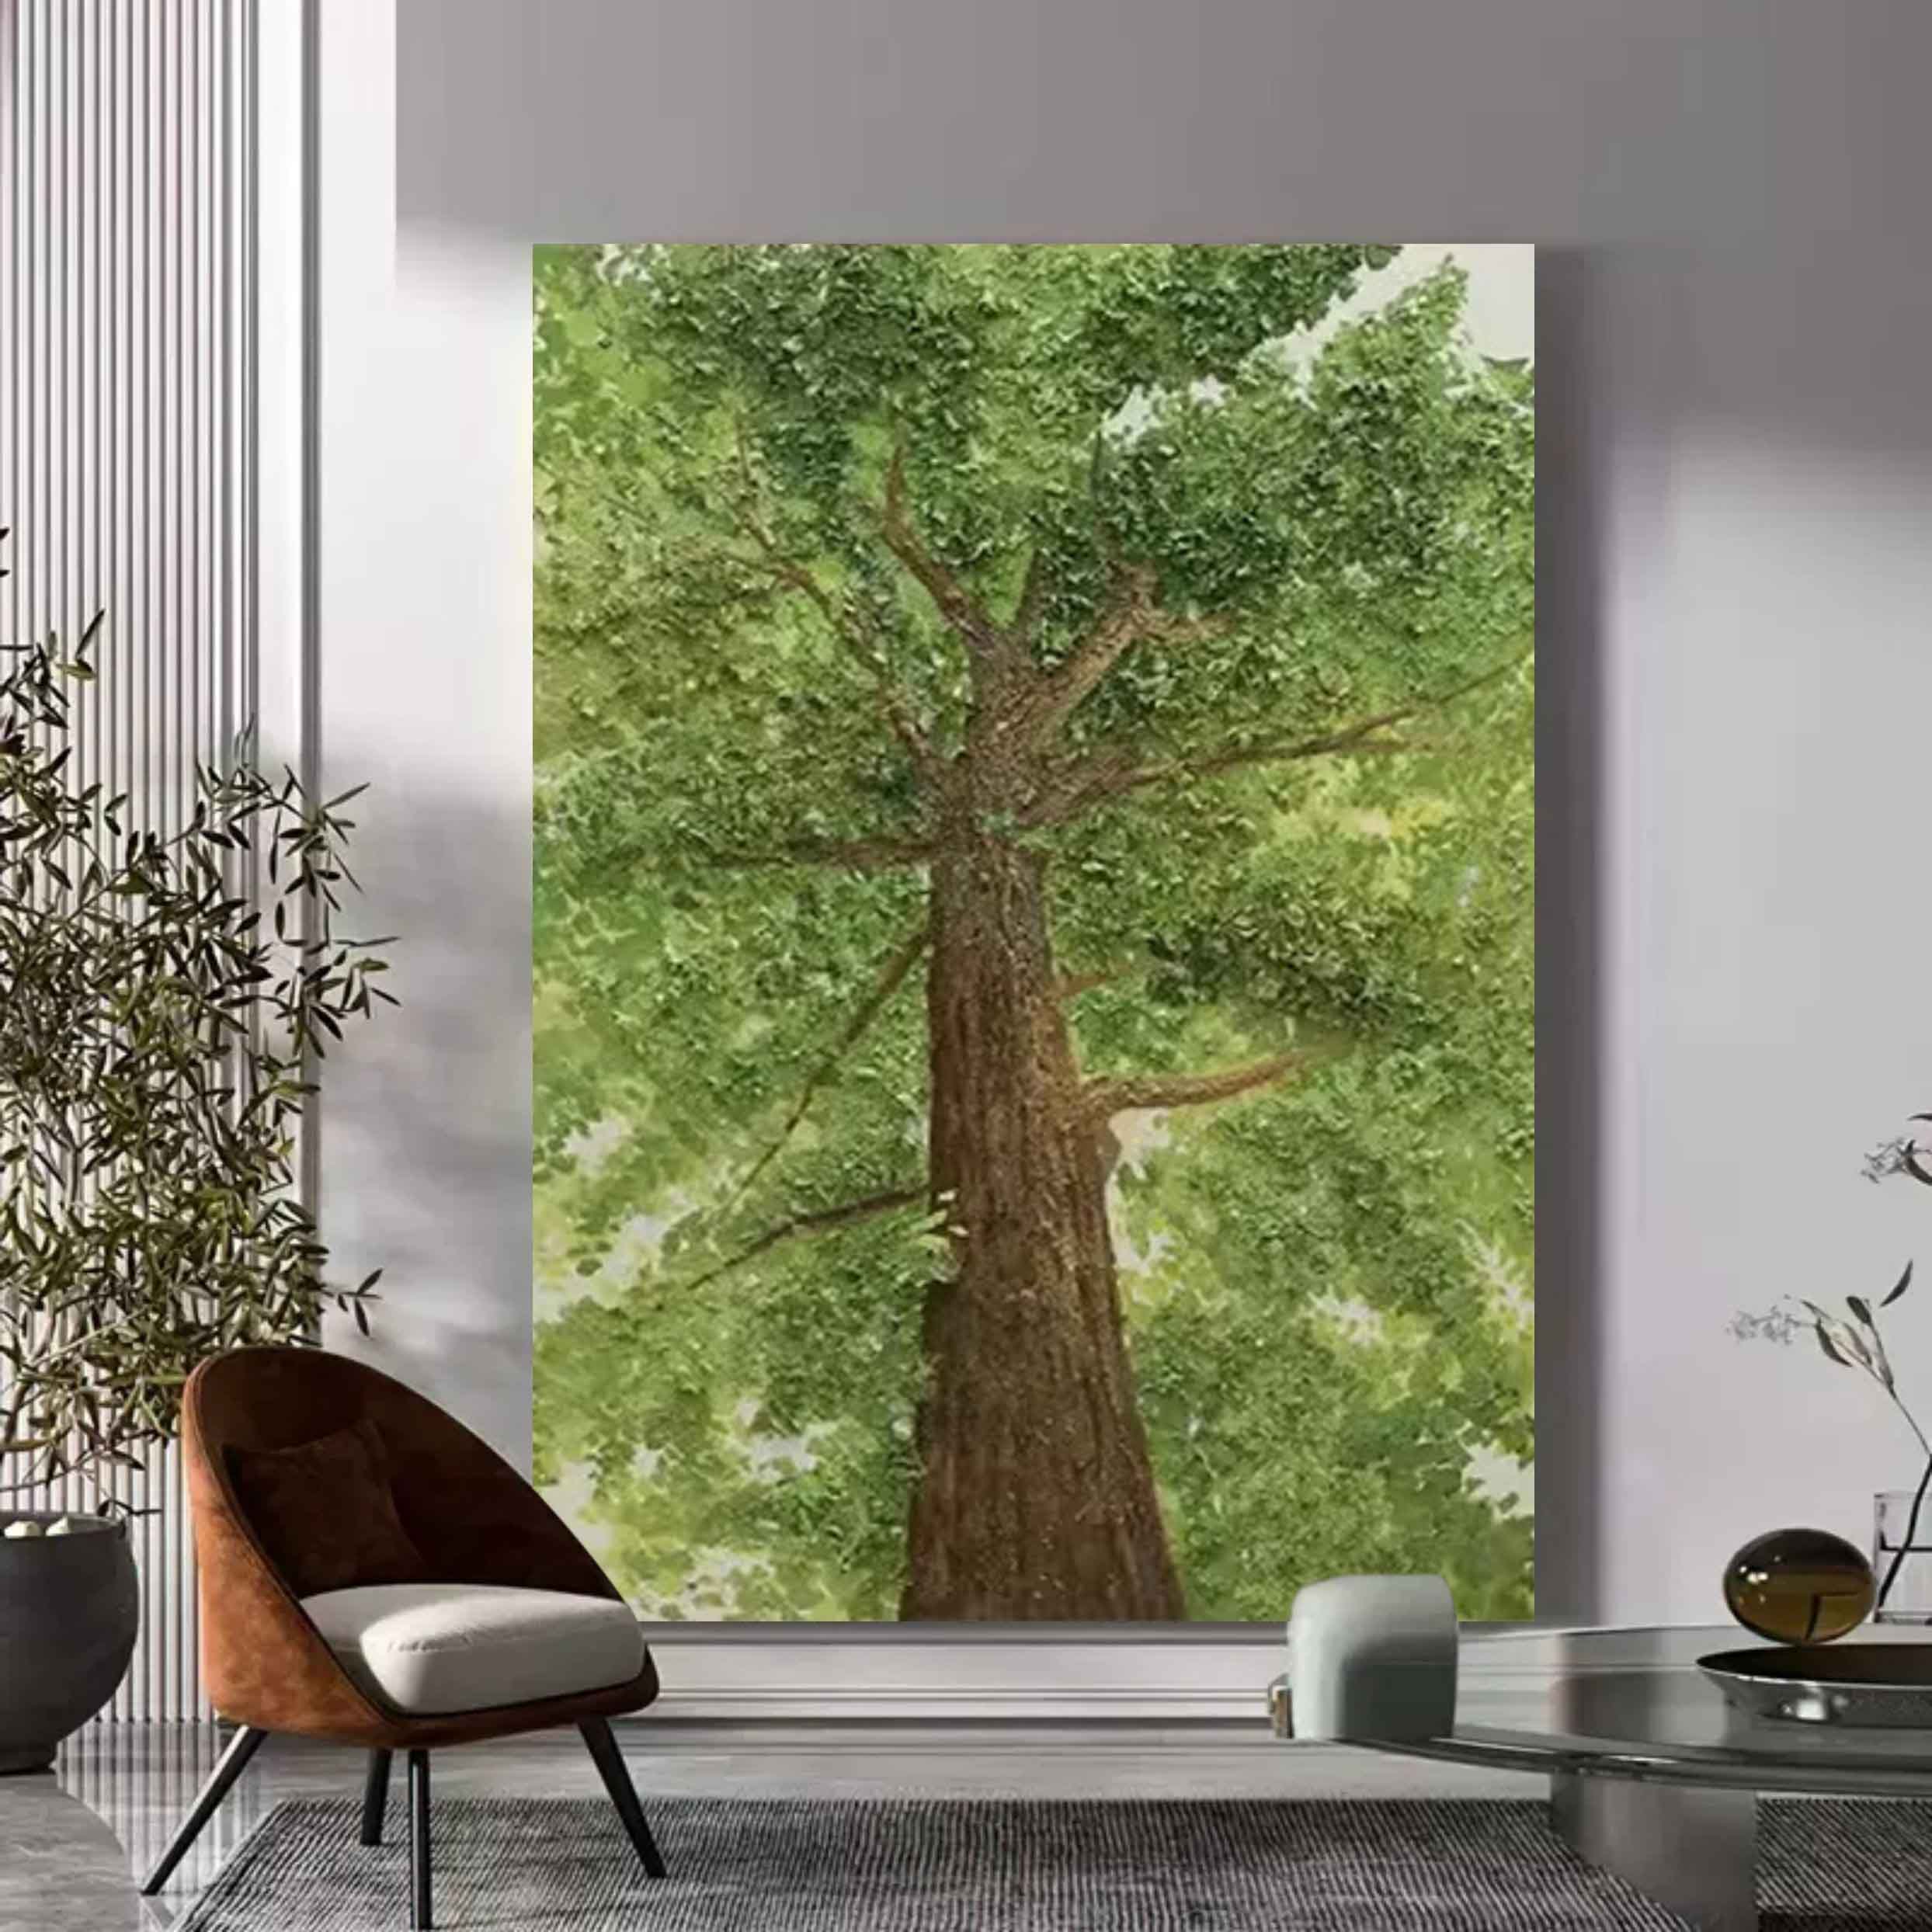 Large Tree